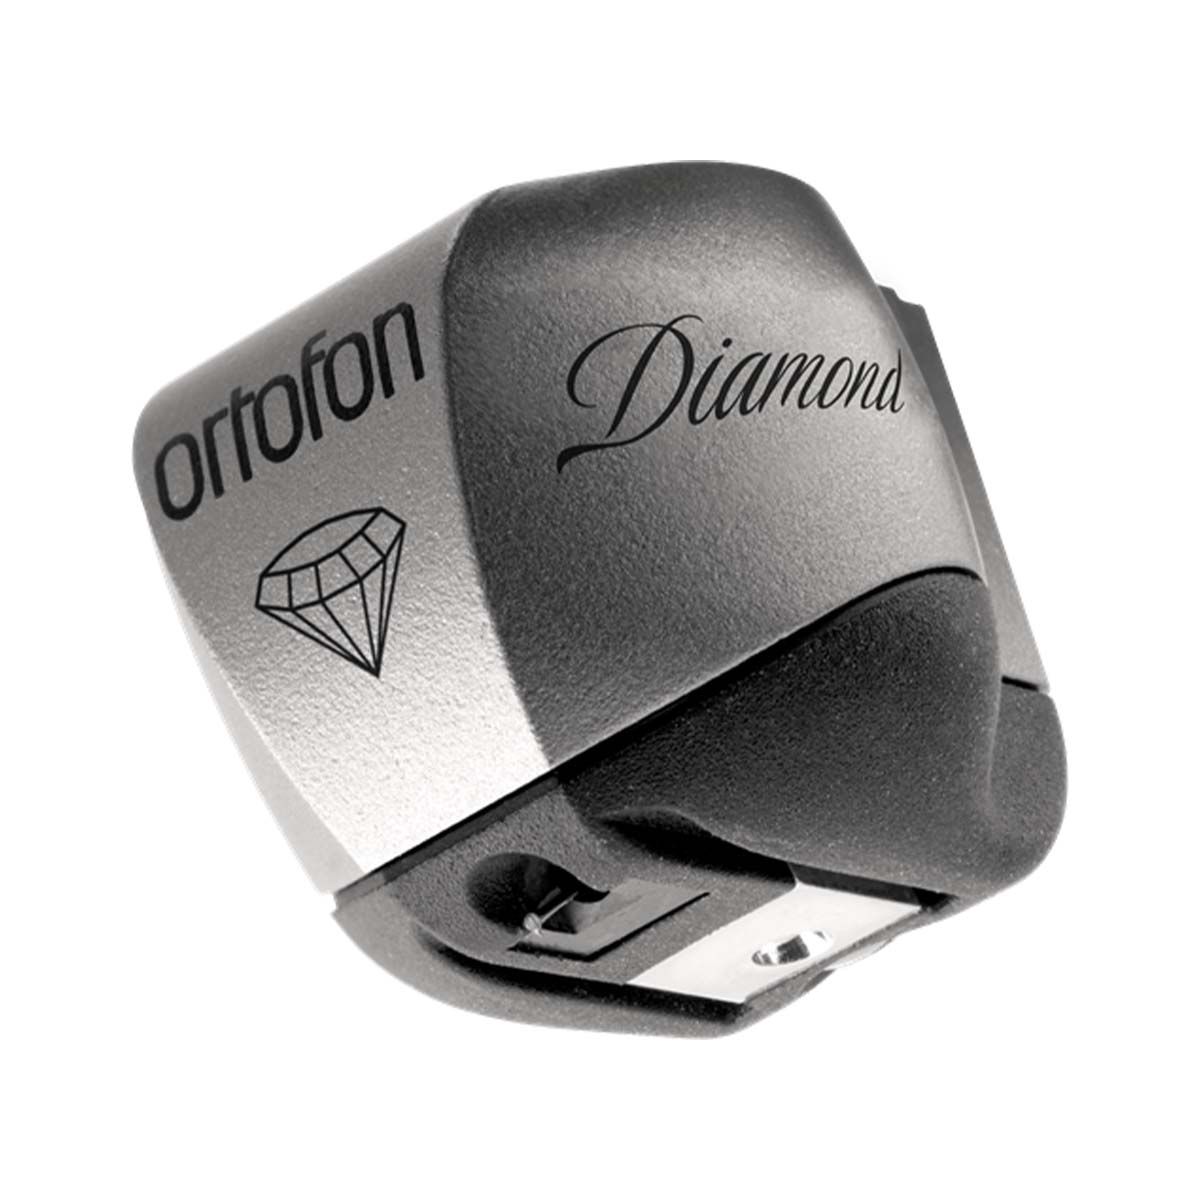 Ortofon MC Diamond Phono Cartridge - angled front view